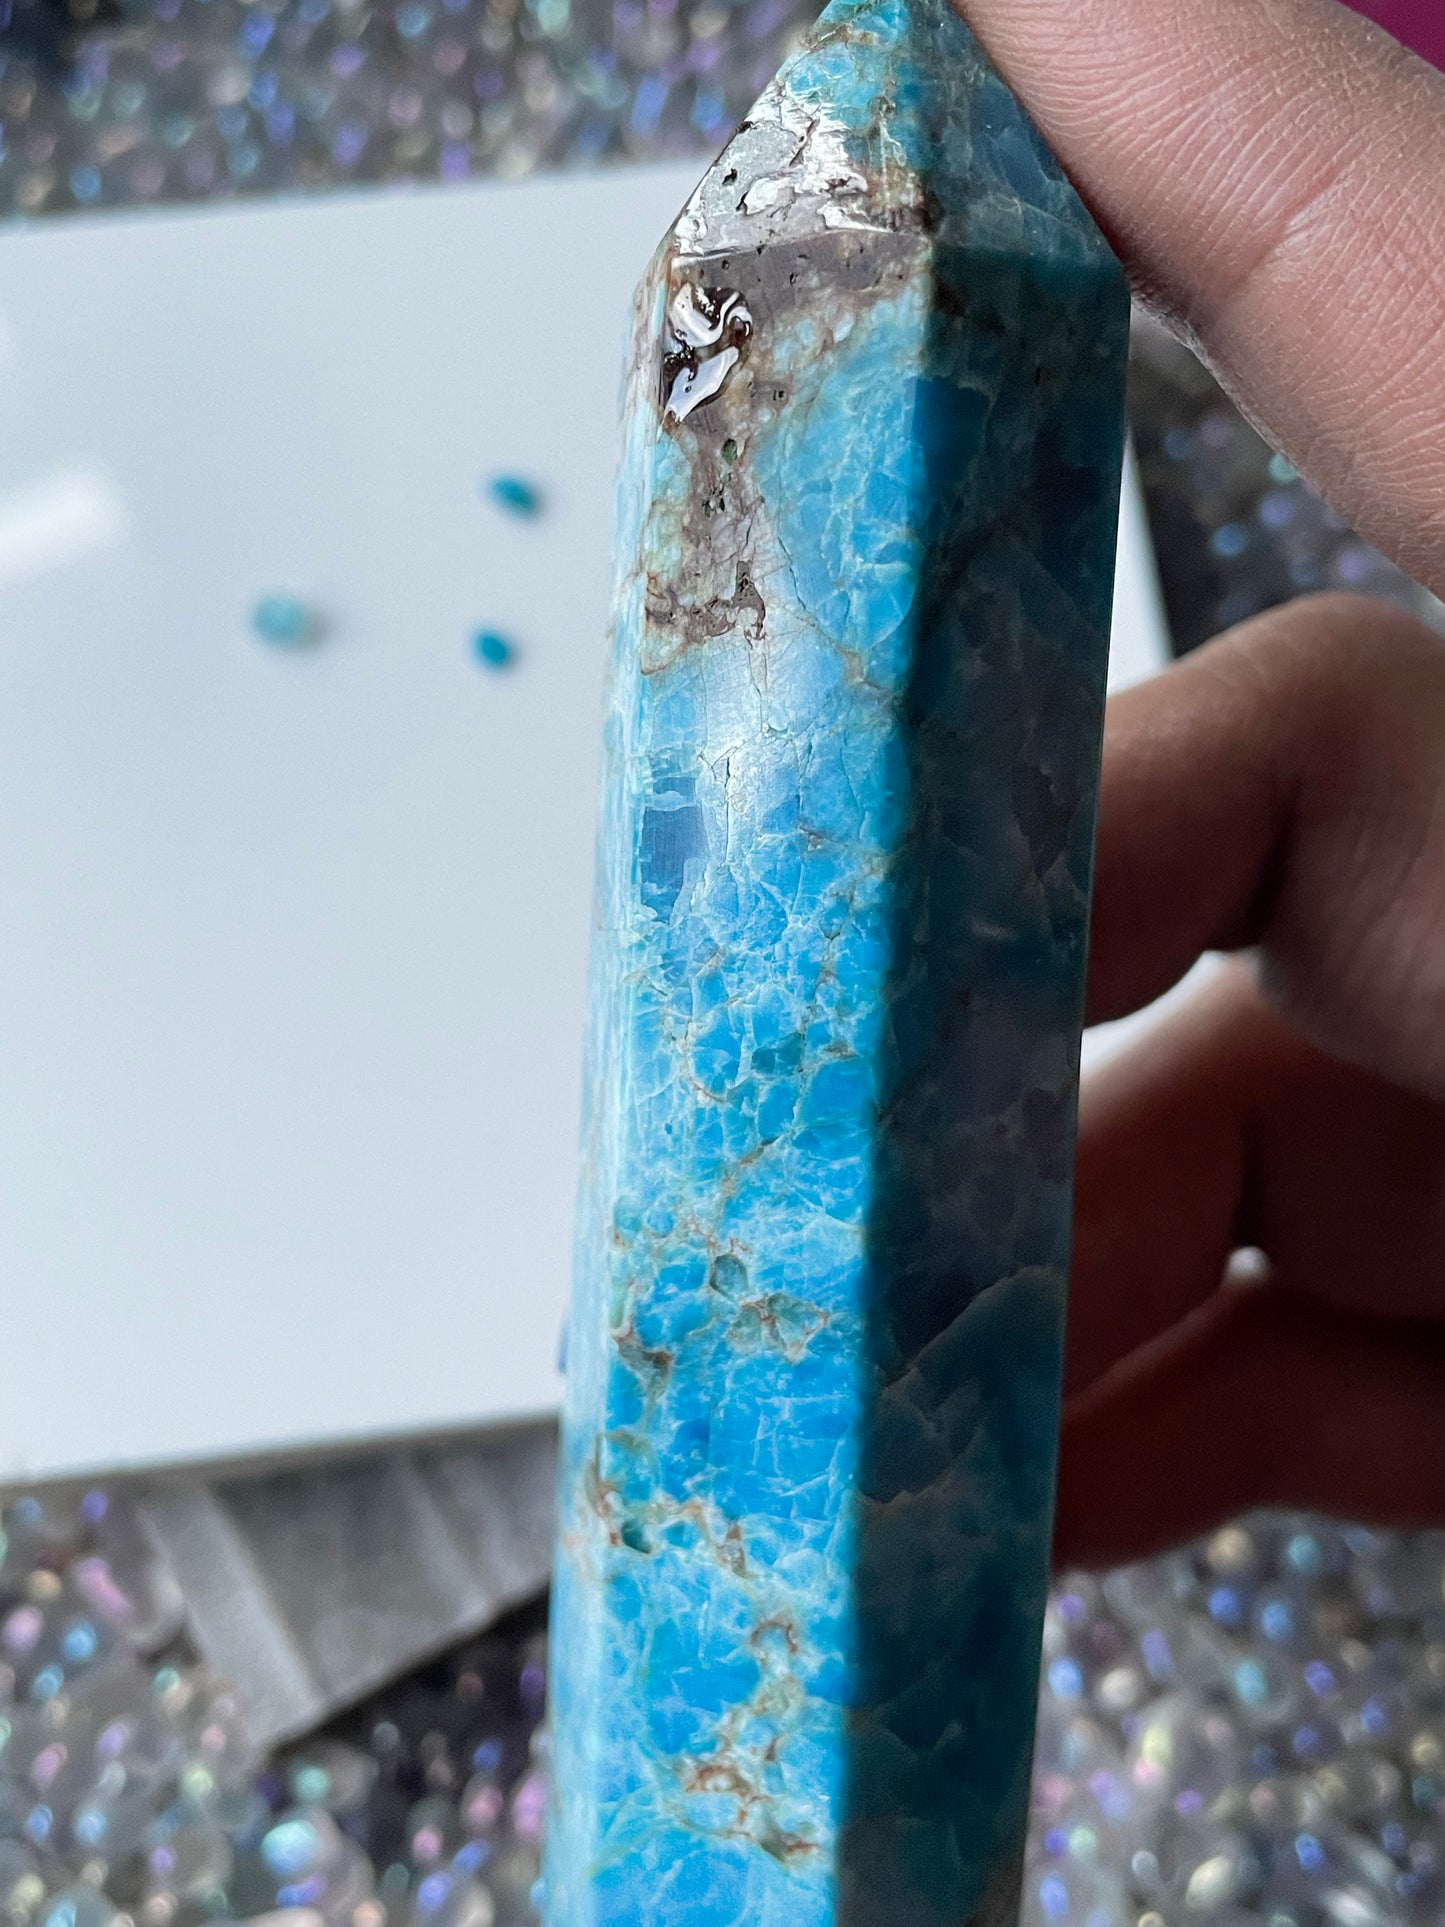 Neon Blue Apatite Gemstone Crystal Tower Point (4)